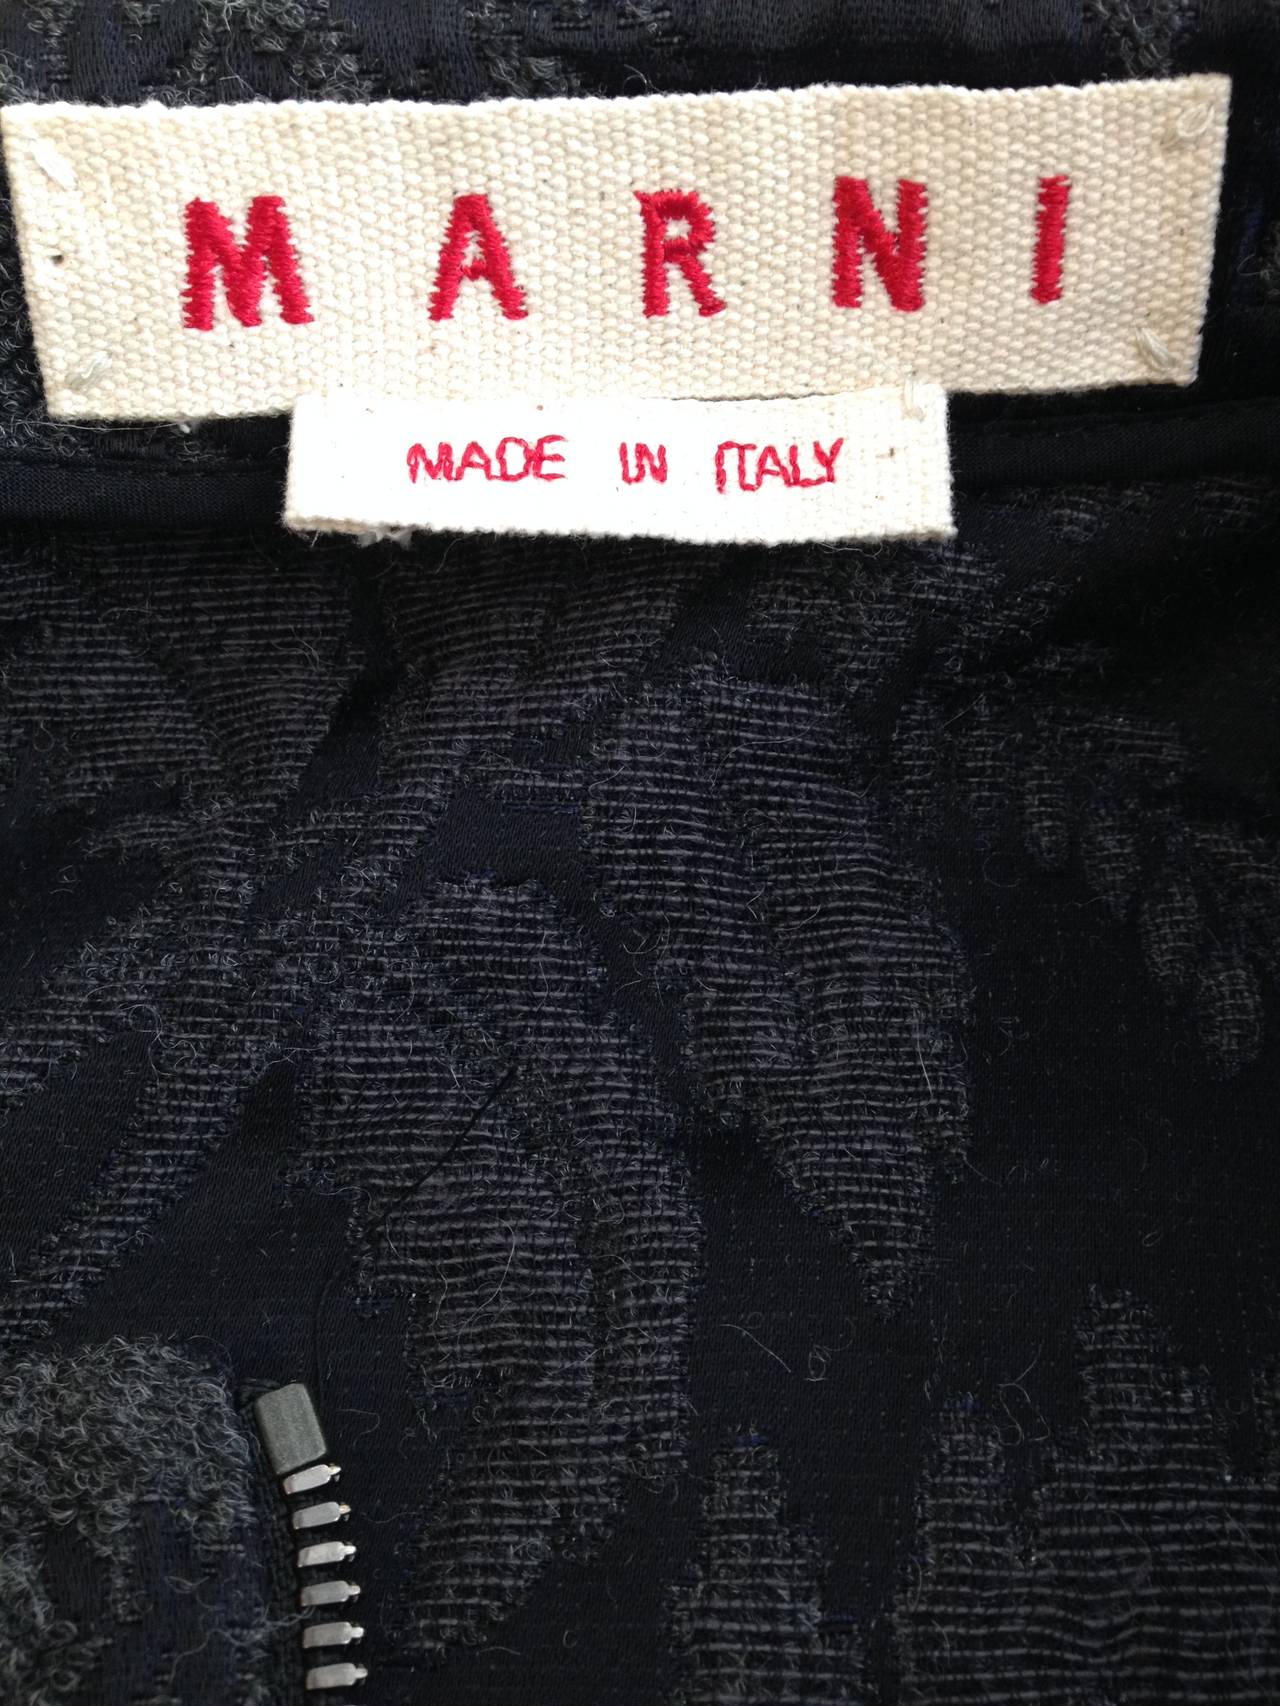 Marni Charcoal Grey and Navy Wool Brocade Jacket 2